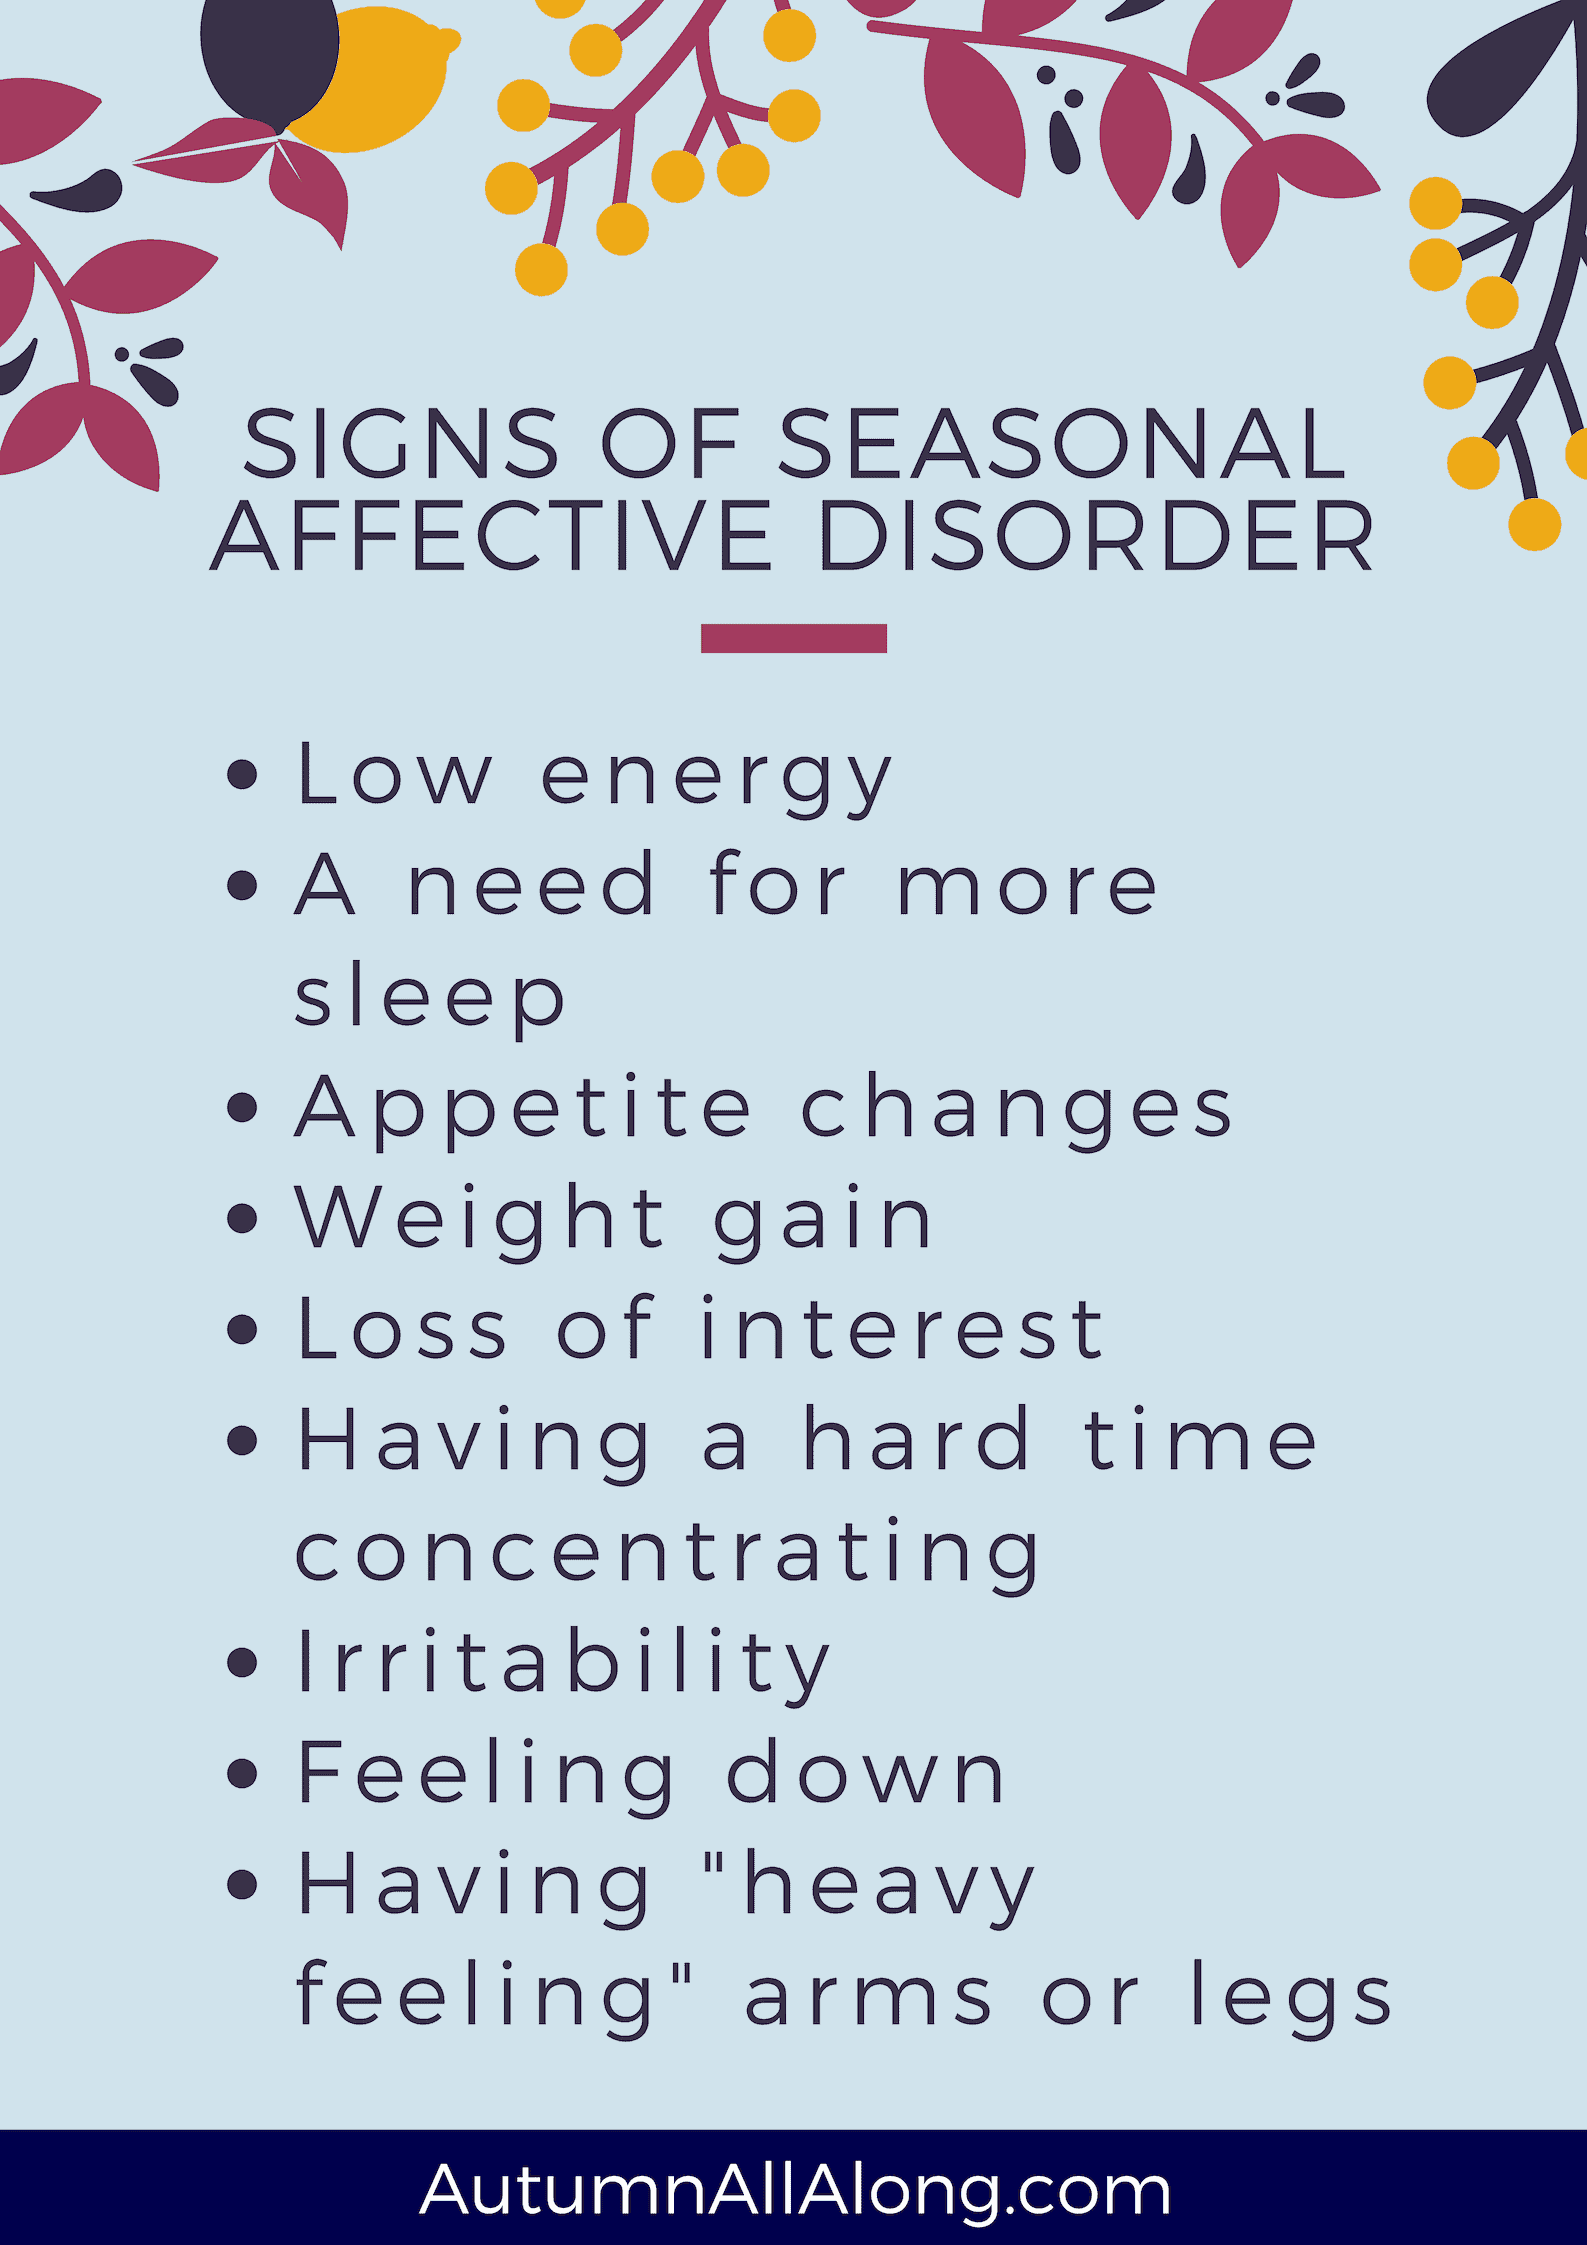 Signs of seasonal affective disorder. | self-care for Seasonal Affective Disorder | via Autumn All Along